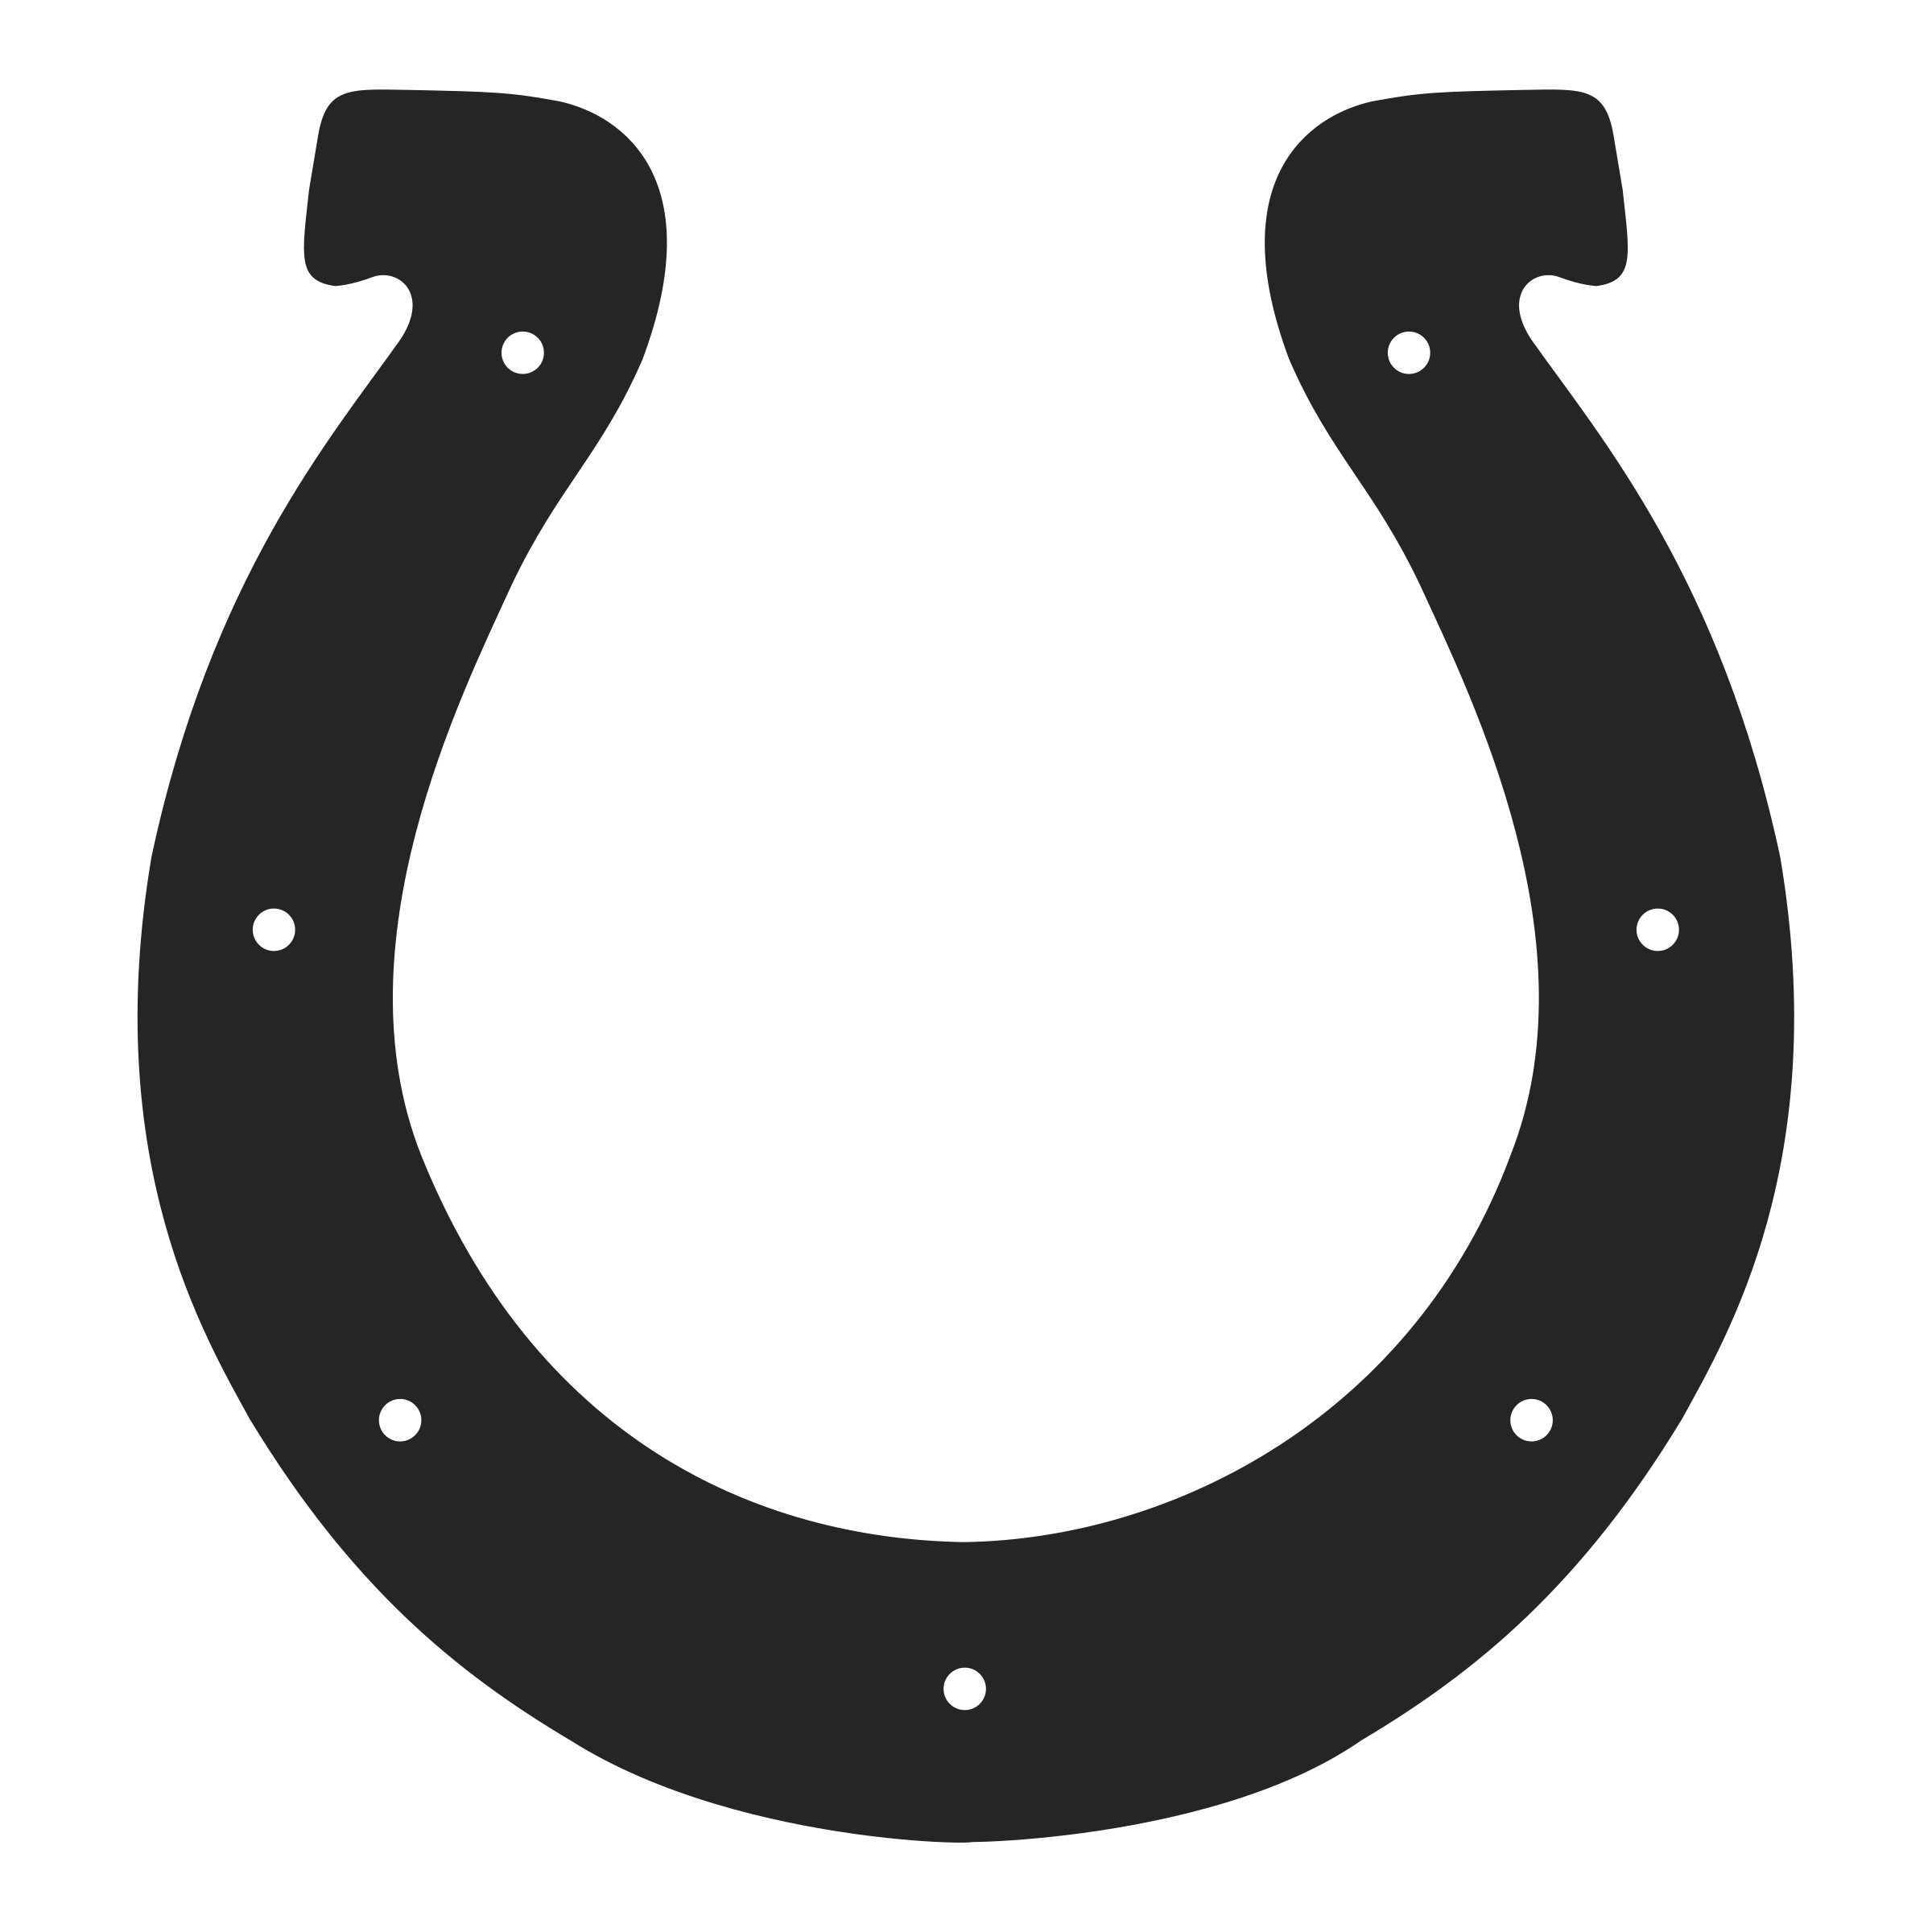 NFL Colts Logo - Indianapolis Colts Logo PNG Transparent & SVG Vector - Freebie Supply